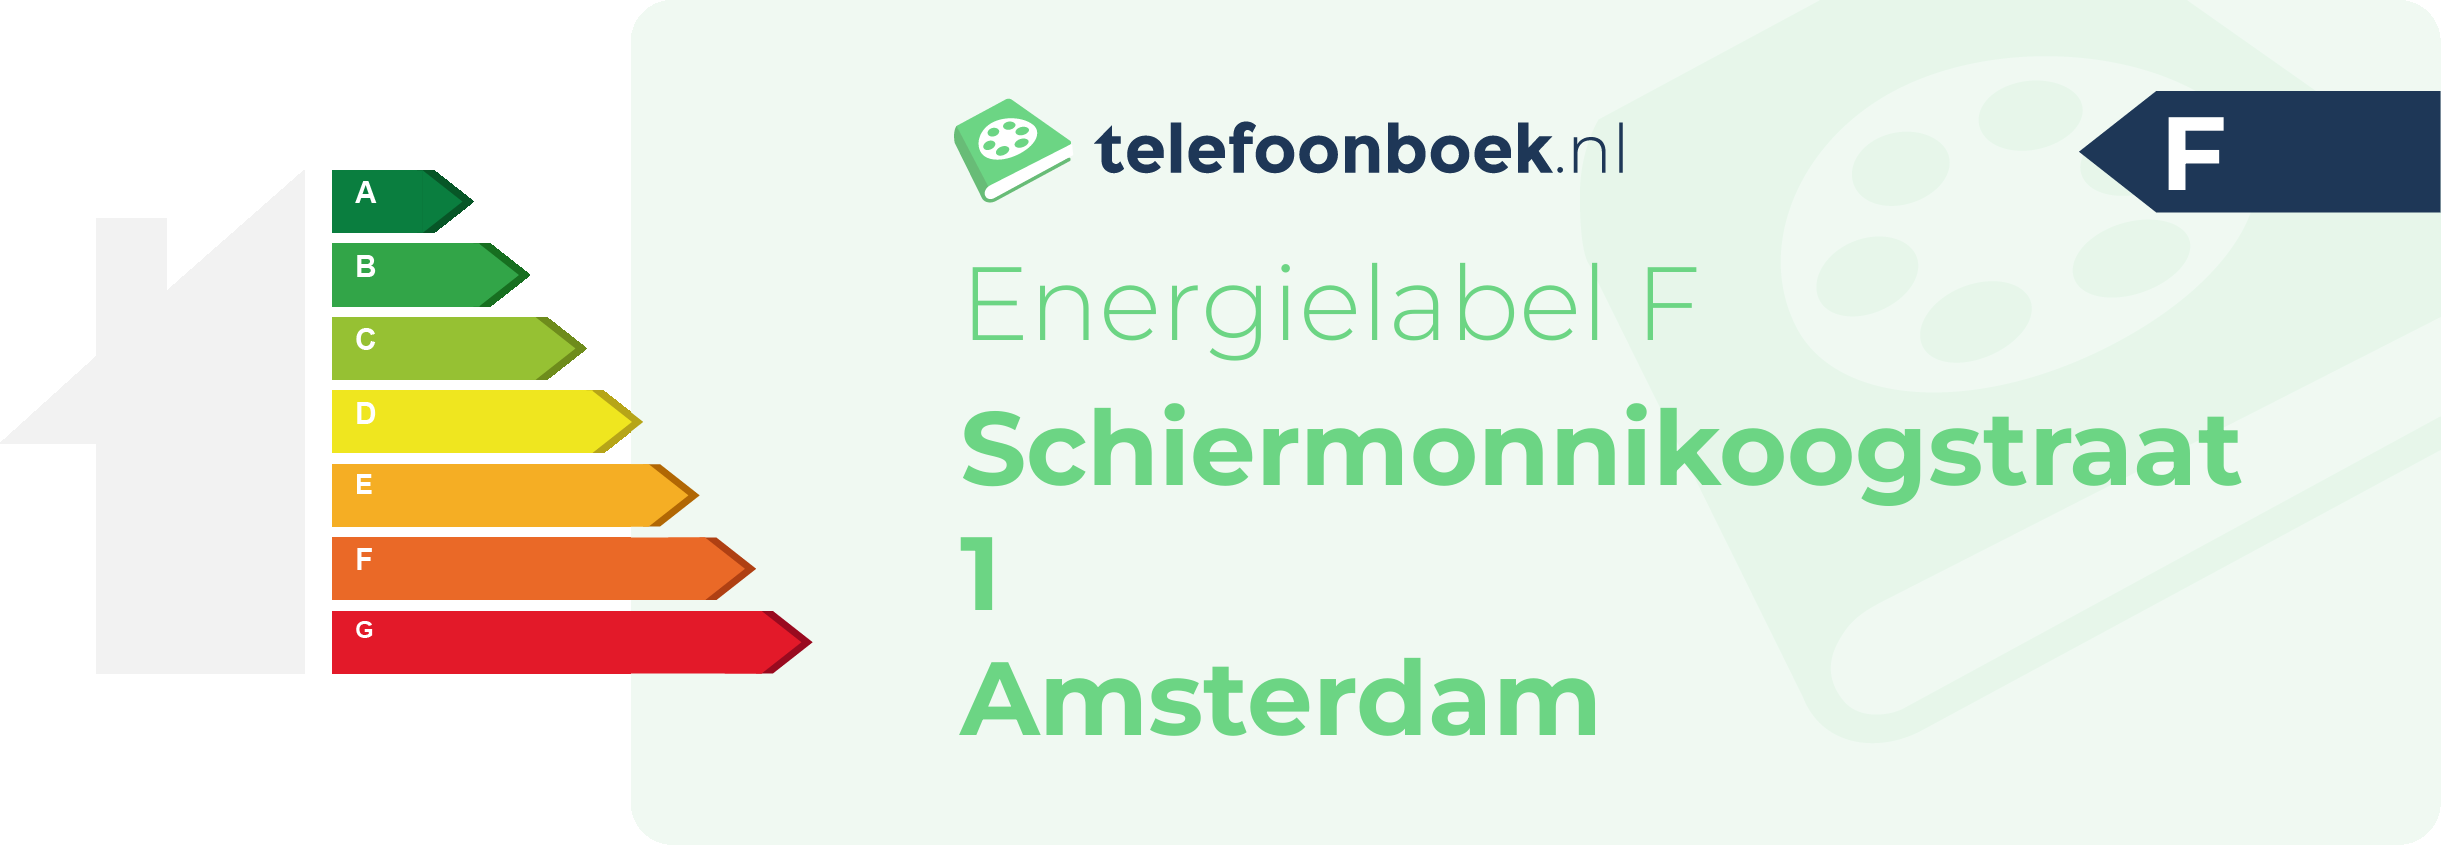 Energielabel Schiermonnikoogstraat 1 Amsterdam